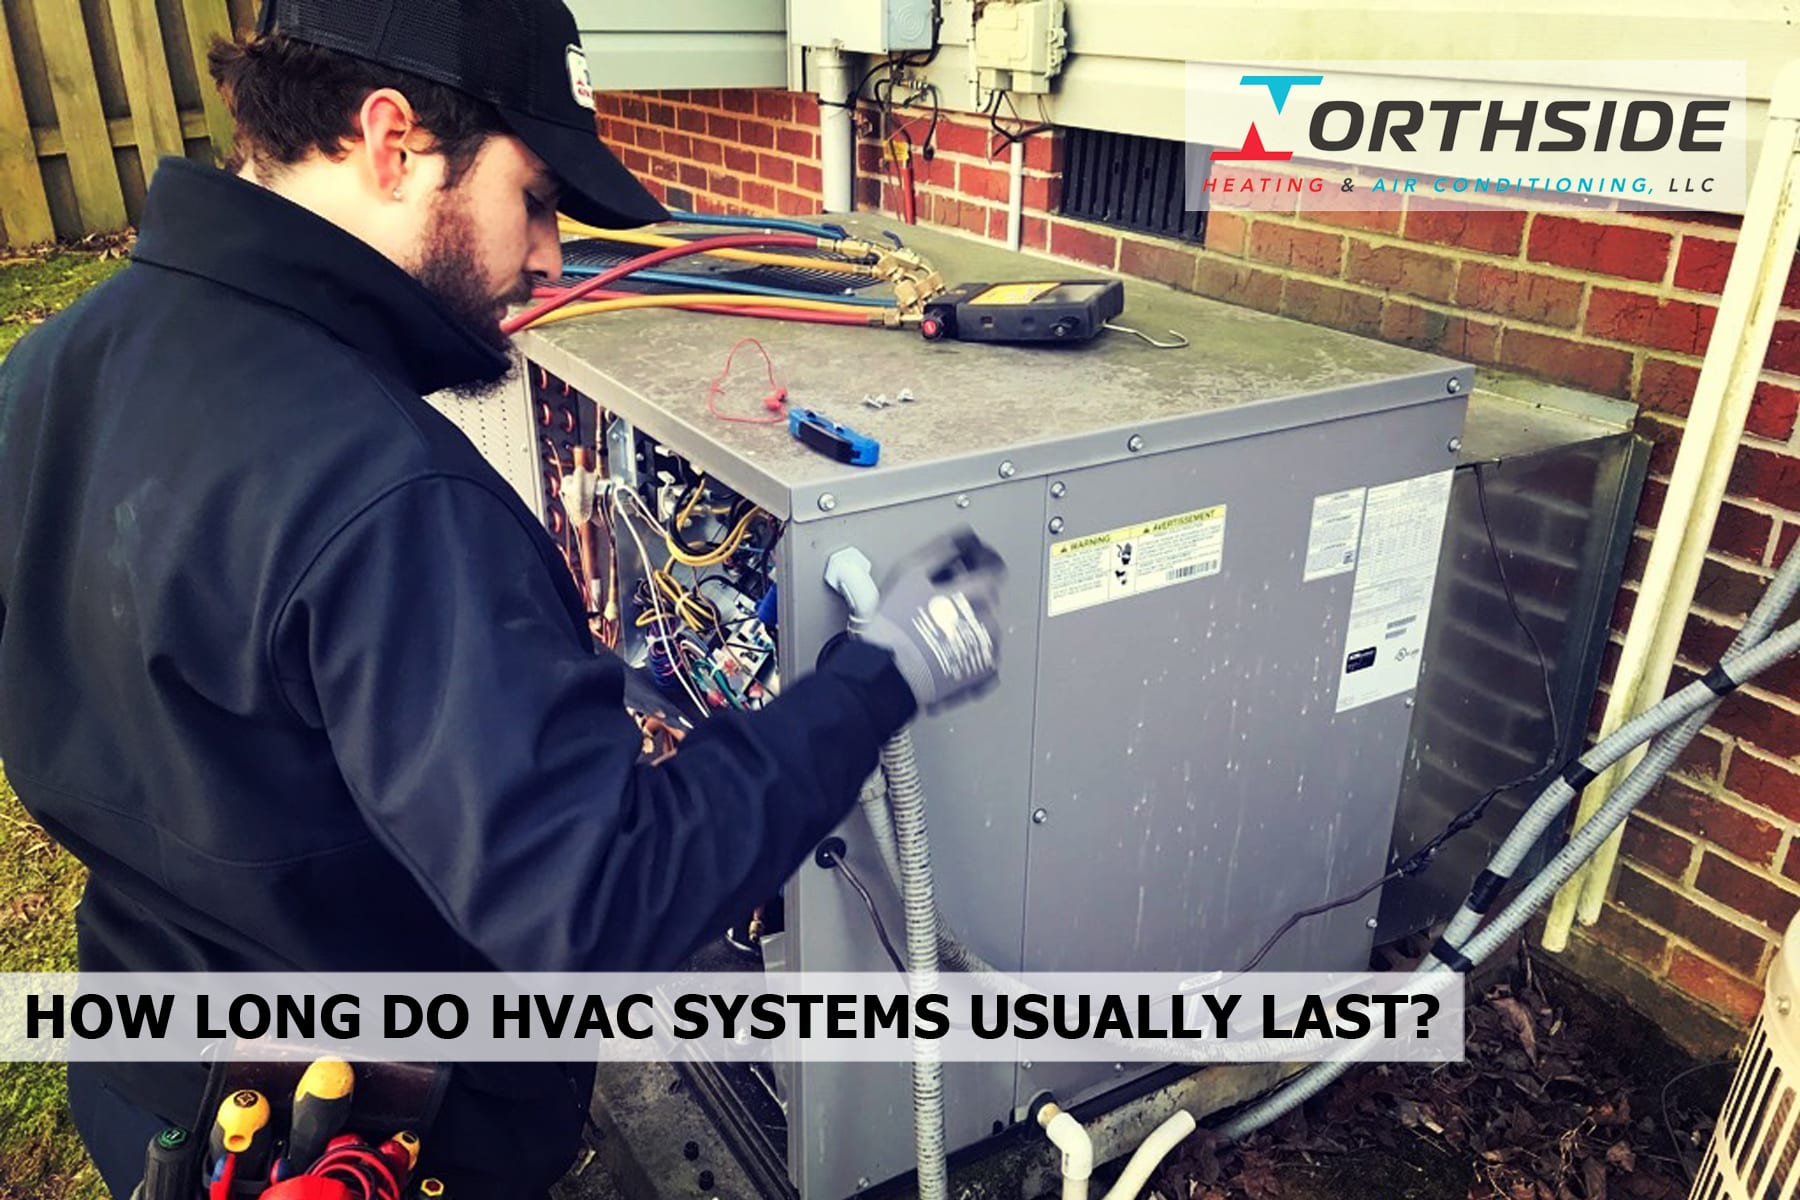 HOW LONG DO HVAC SYSTEMS USUALLY LAST?